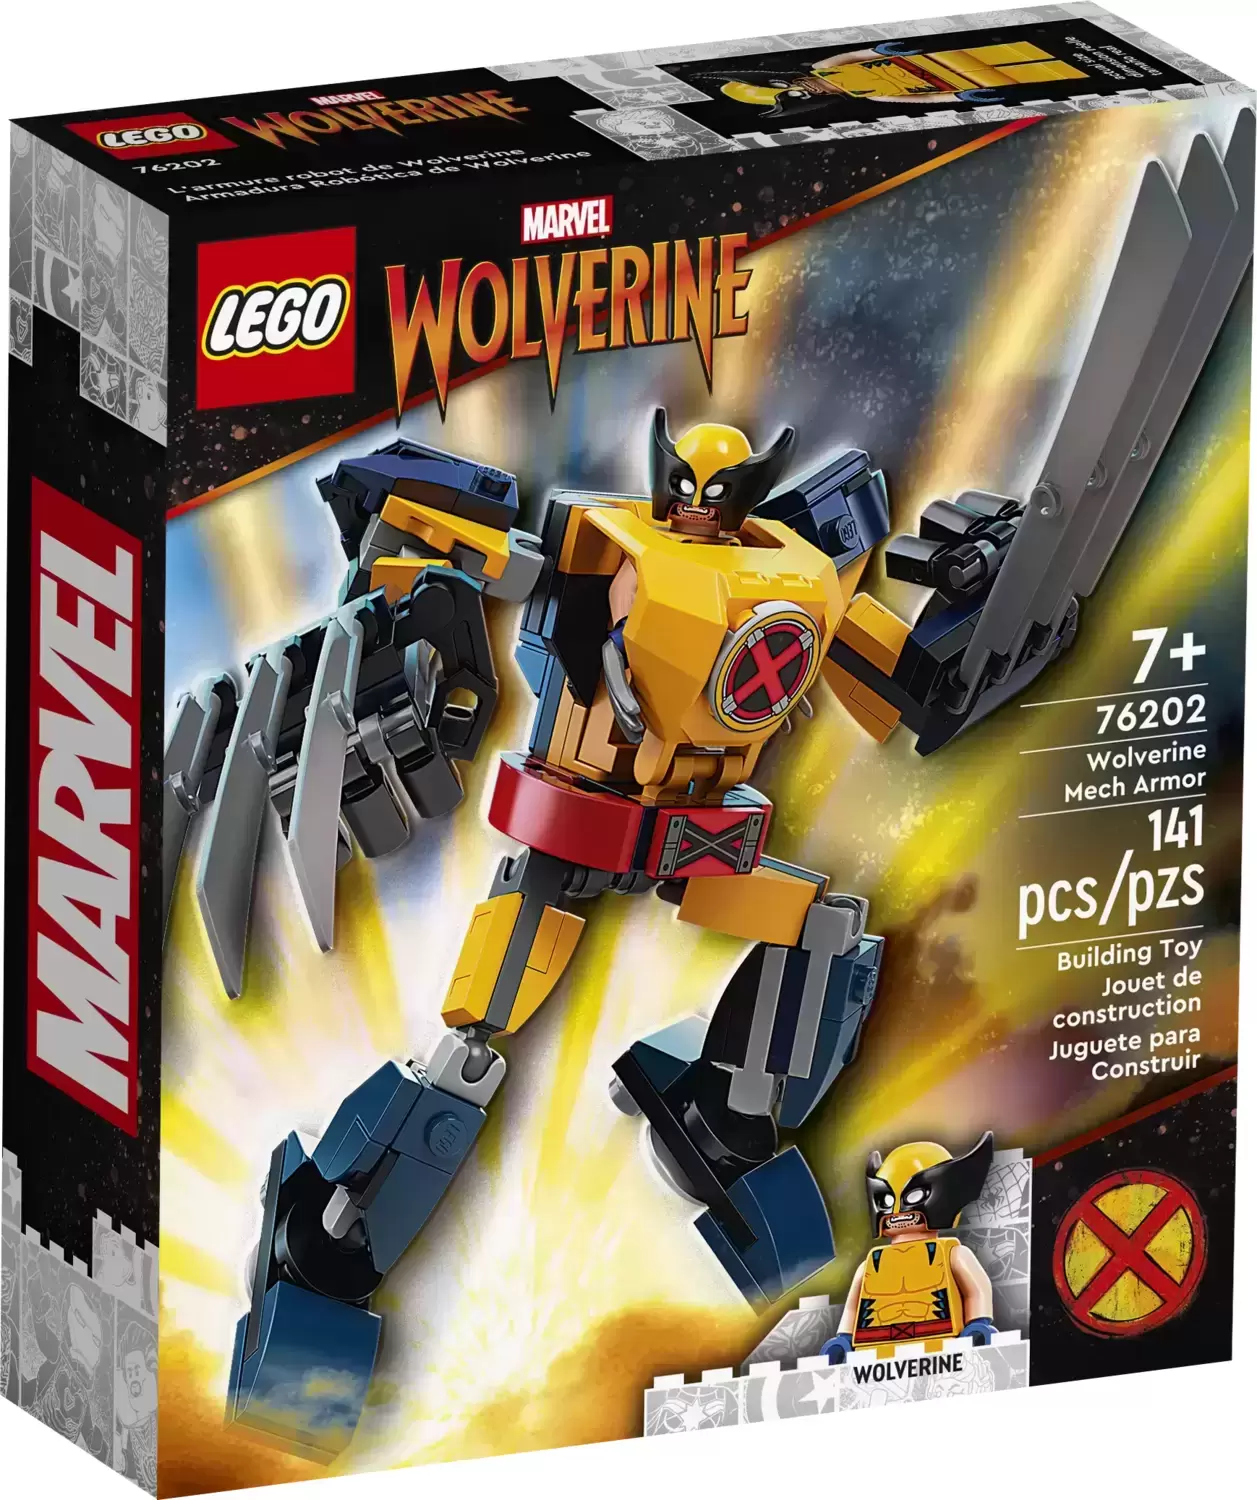 LEGO MARVEL Super Heroes - Wolverine Mech Armor